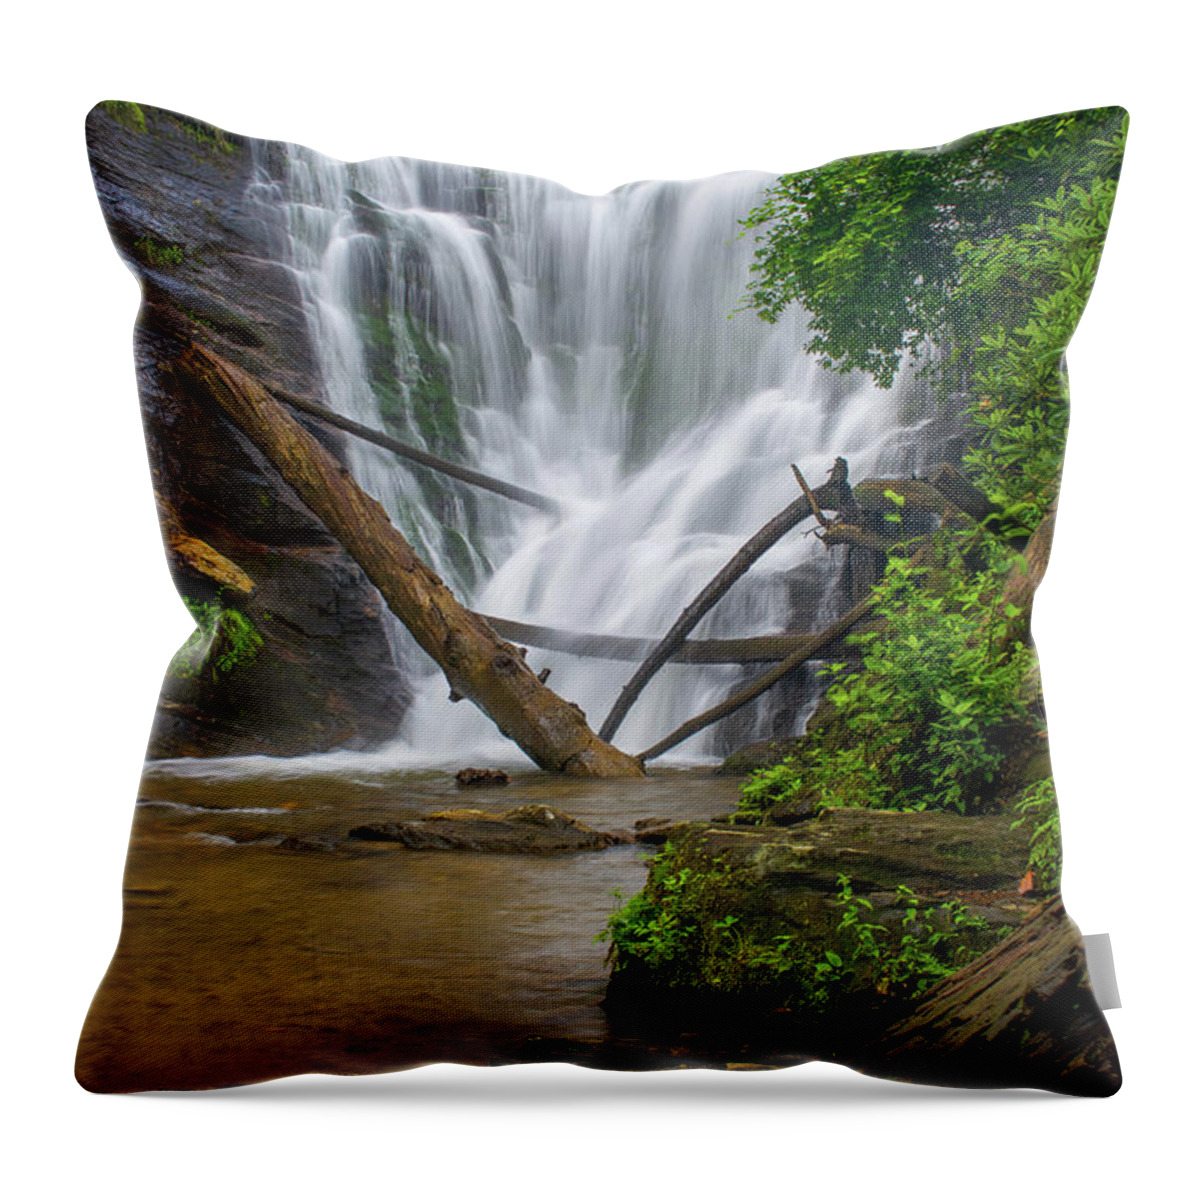 King Creek Falls Throw Pillow featuring the photograph King Creek Falls by Robert J Wagner